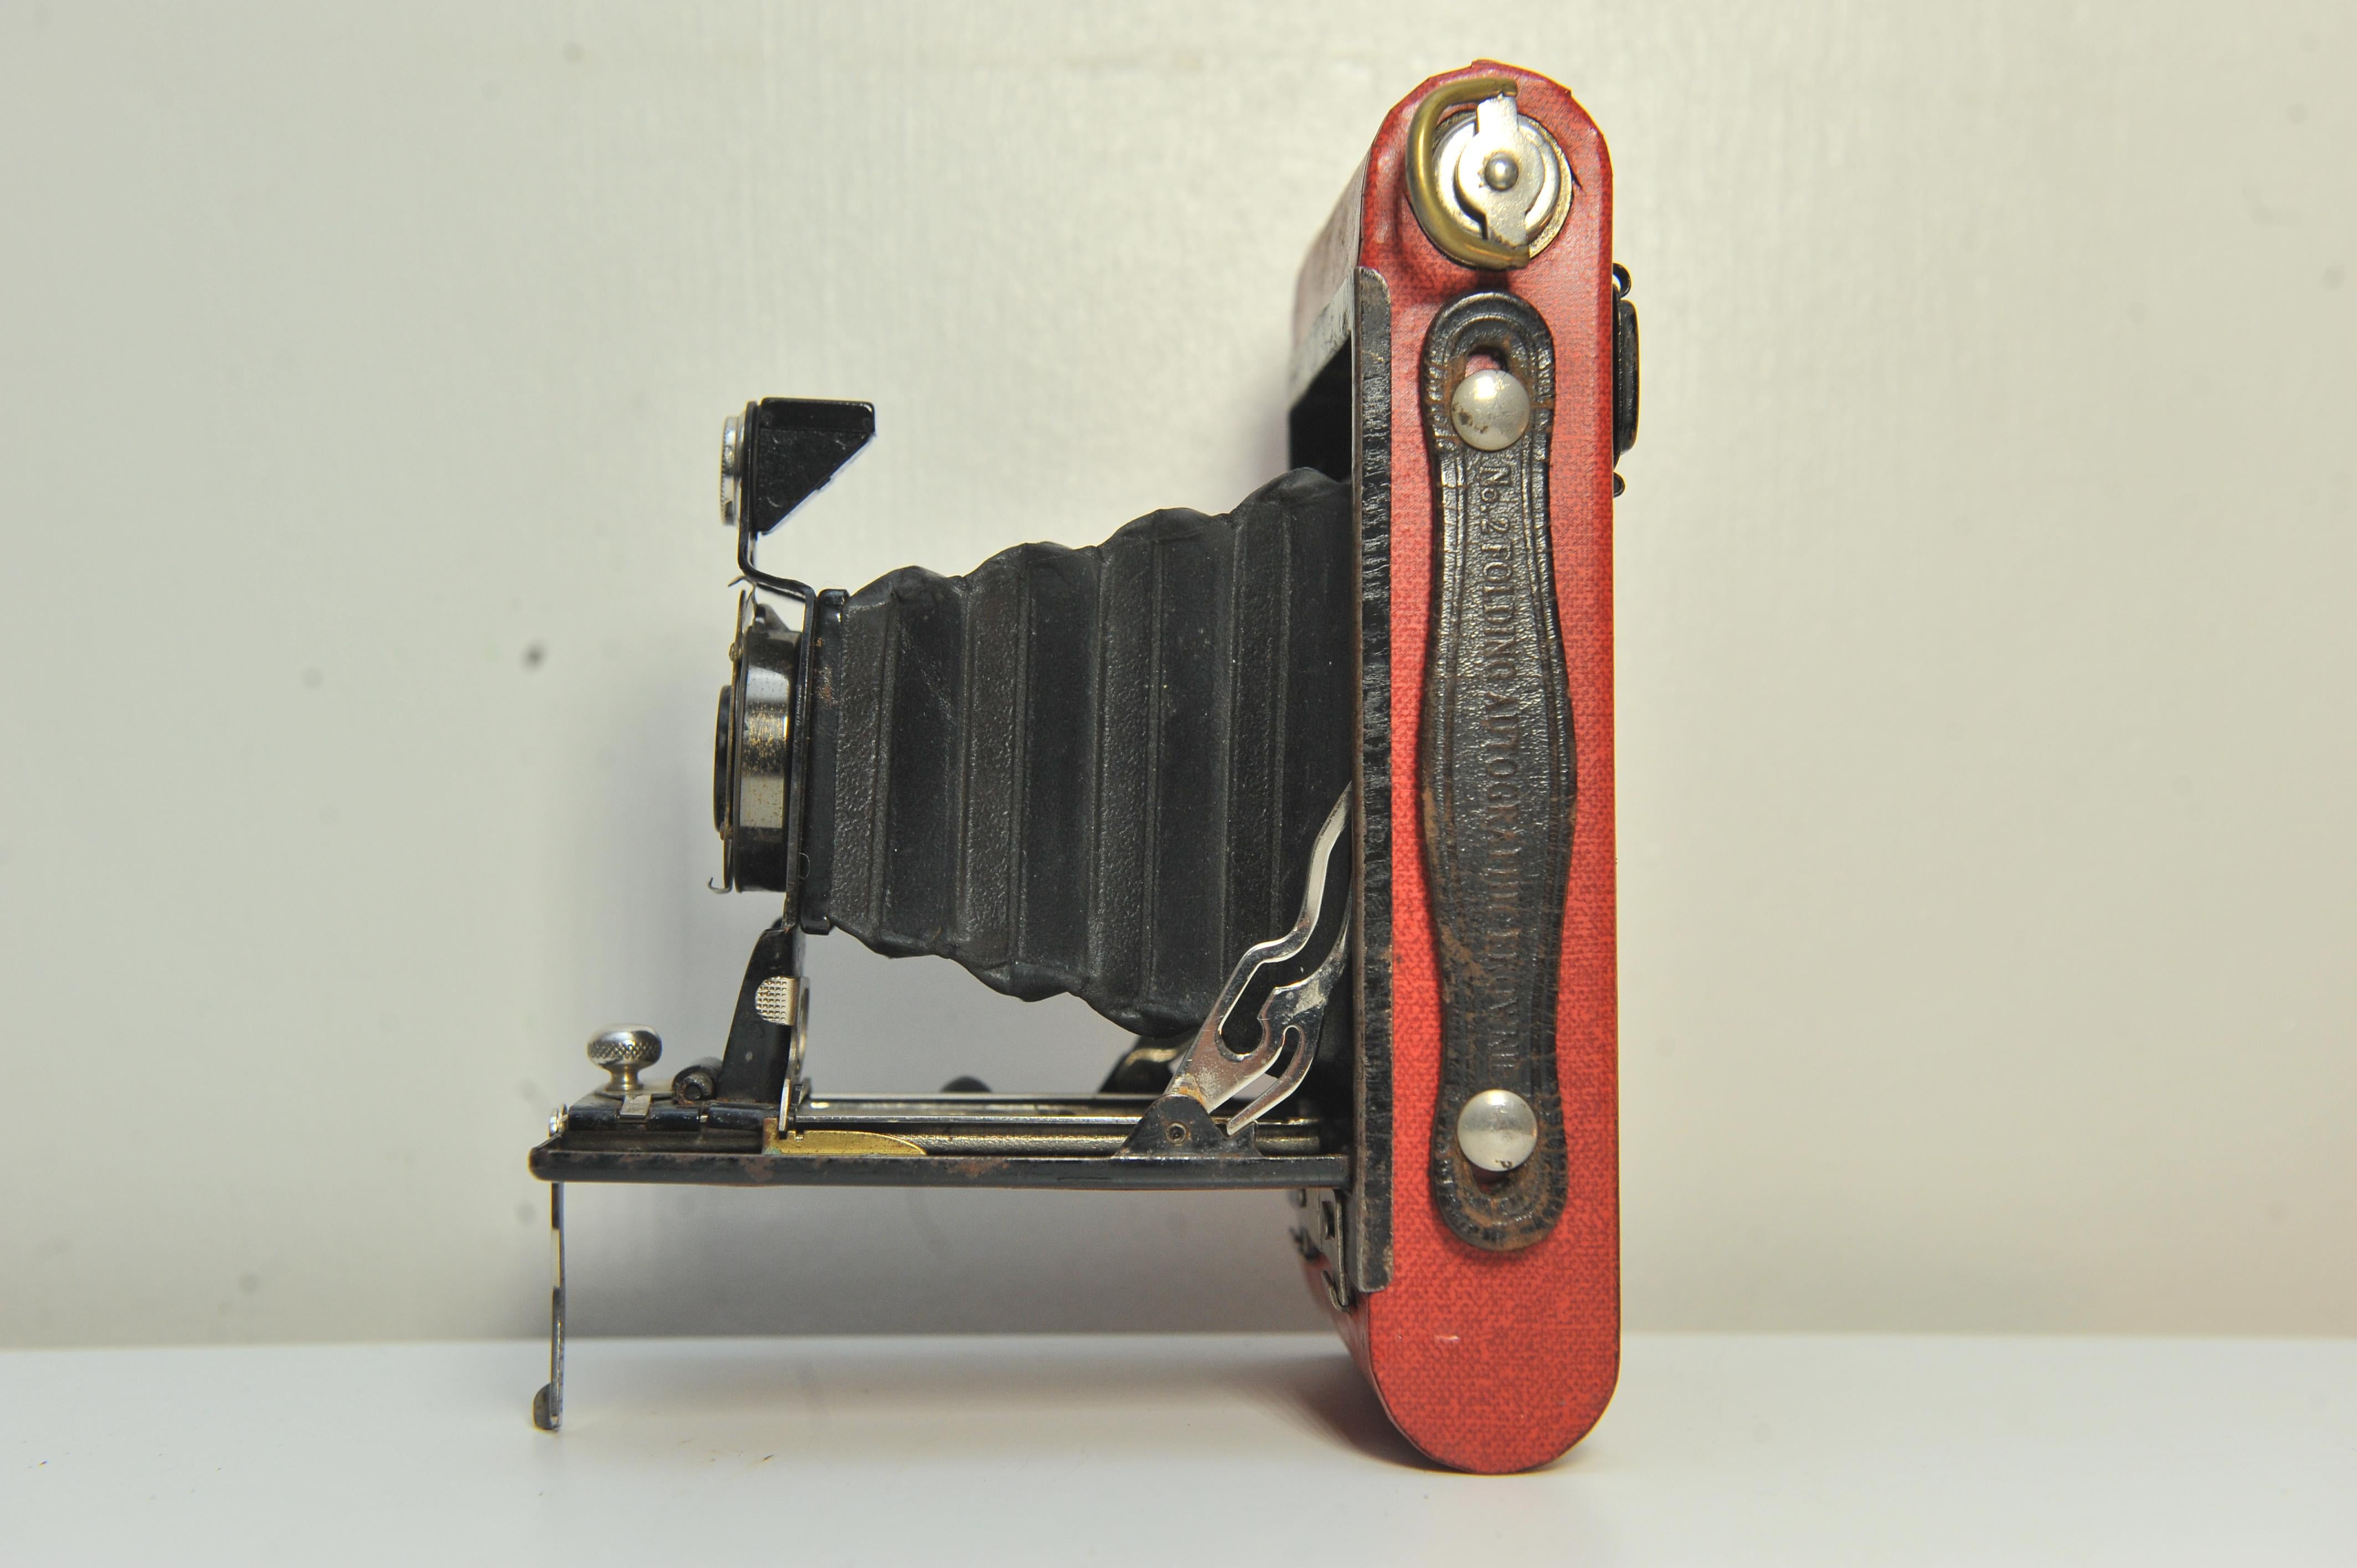 Eastman Kodak No 2 Folding Autographic Brownie Folding Bellows Camera In Red

Manufactured between 1915 & 1926
Takes 120 Rollfilm
With Kodak Ballbearing Shutter 
